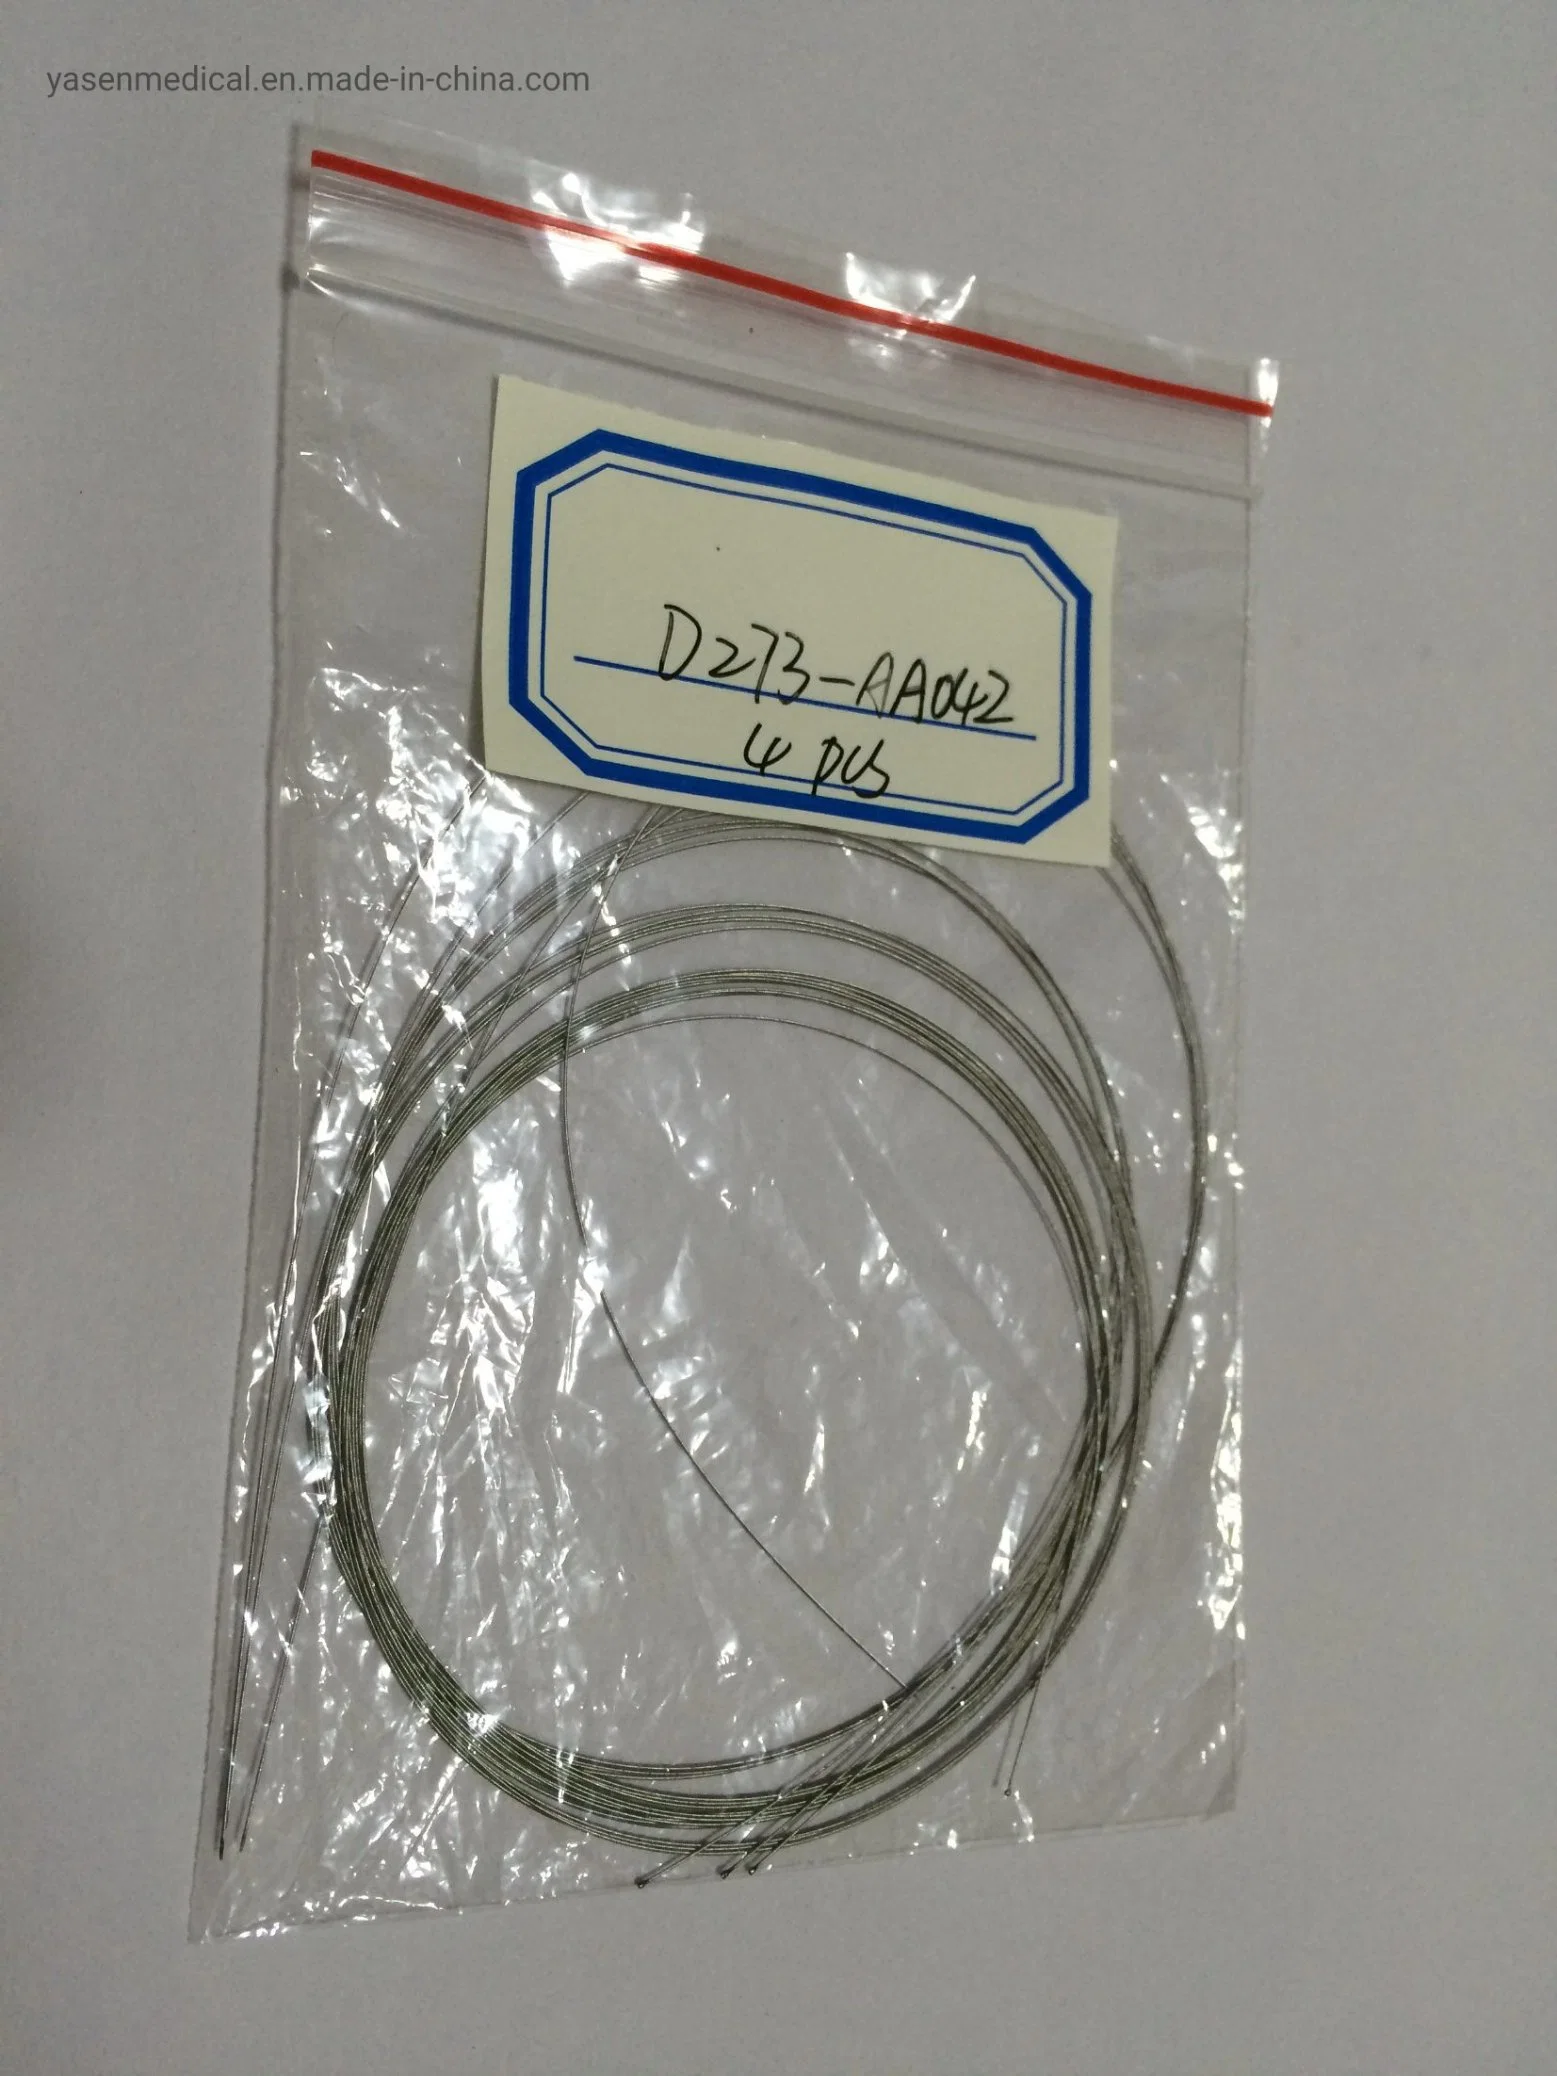 Pentax Eg1840 Endoscope Angle Wire D273-AA042